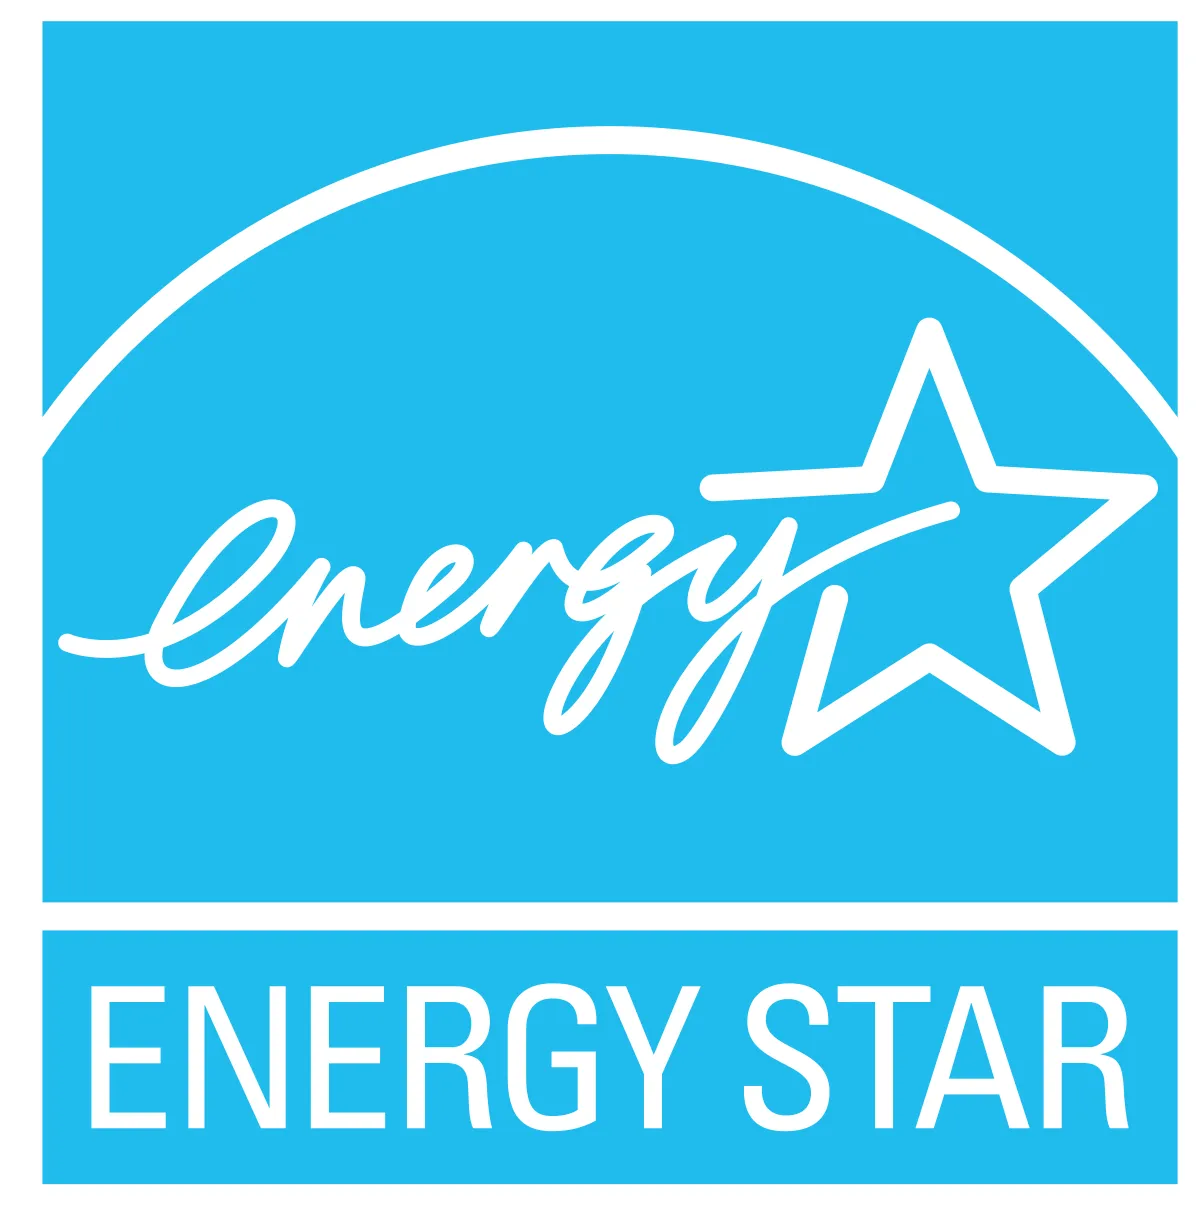 Energy Star energy efficient logo